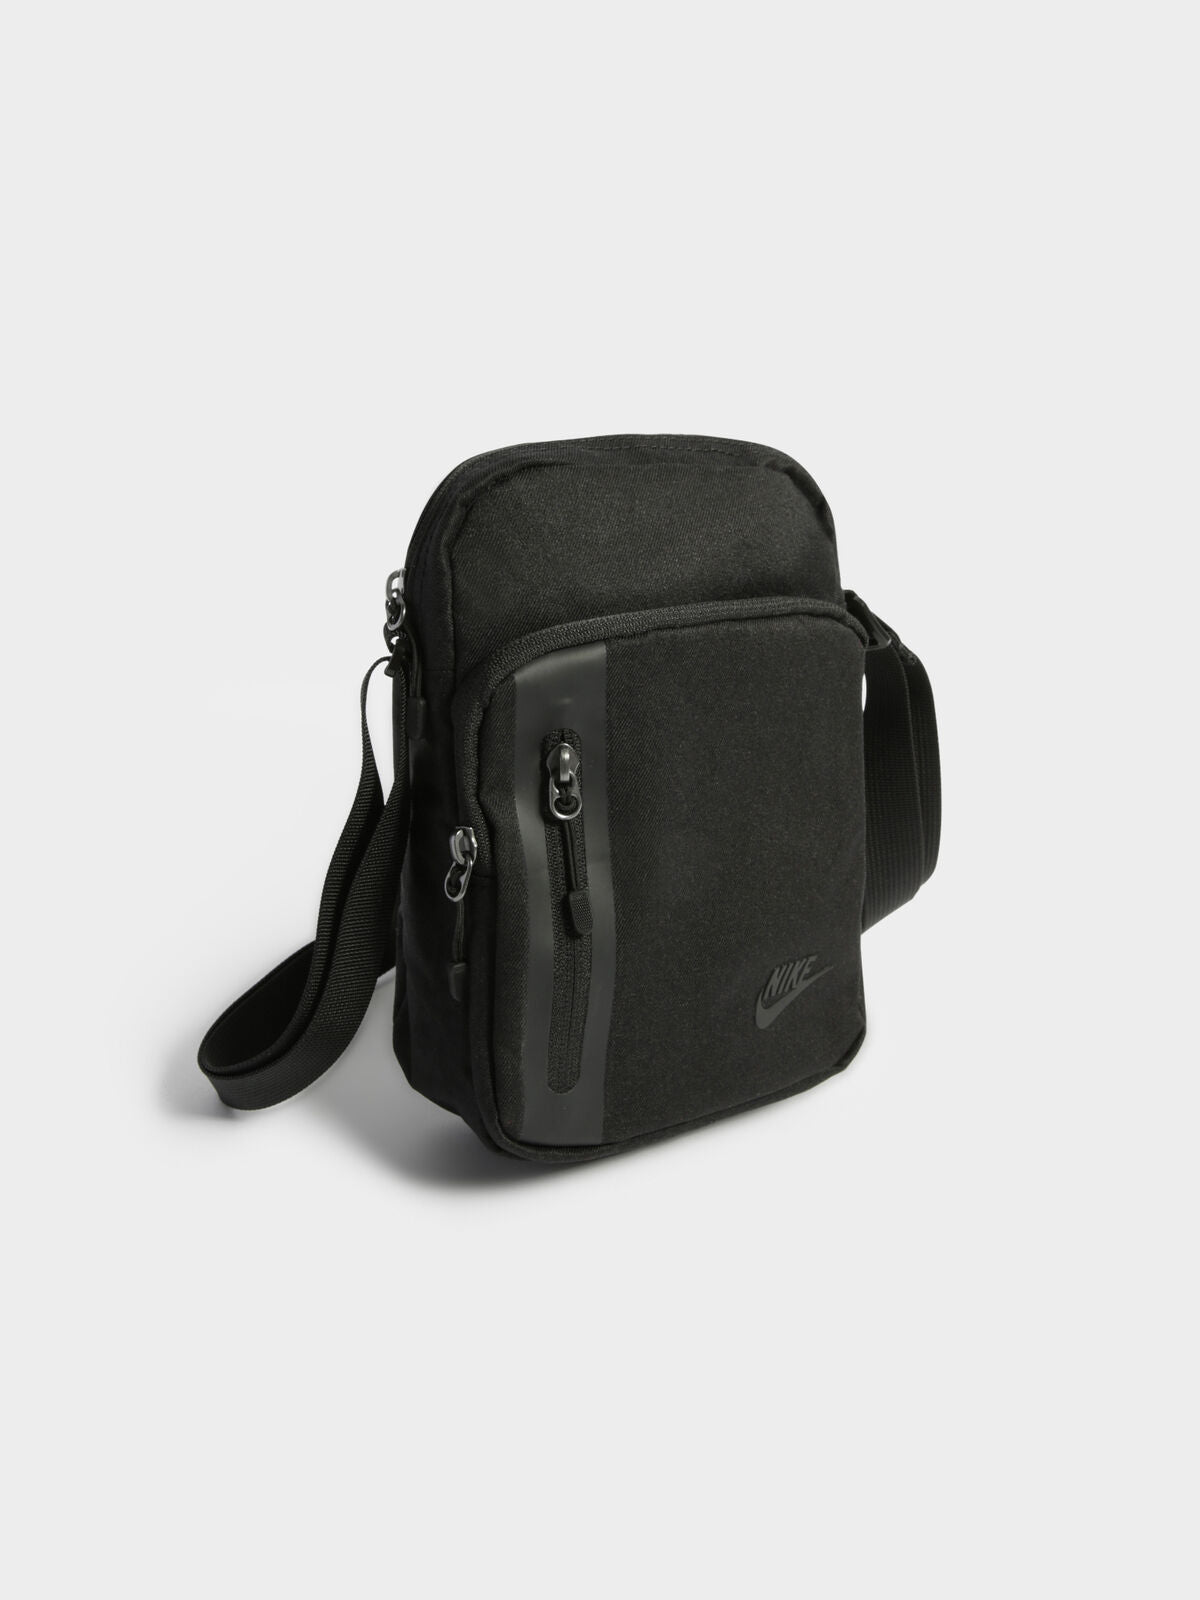 Core Small Items 3.0 Bag in Black